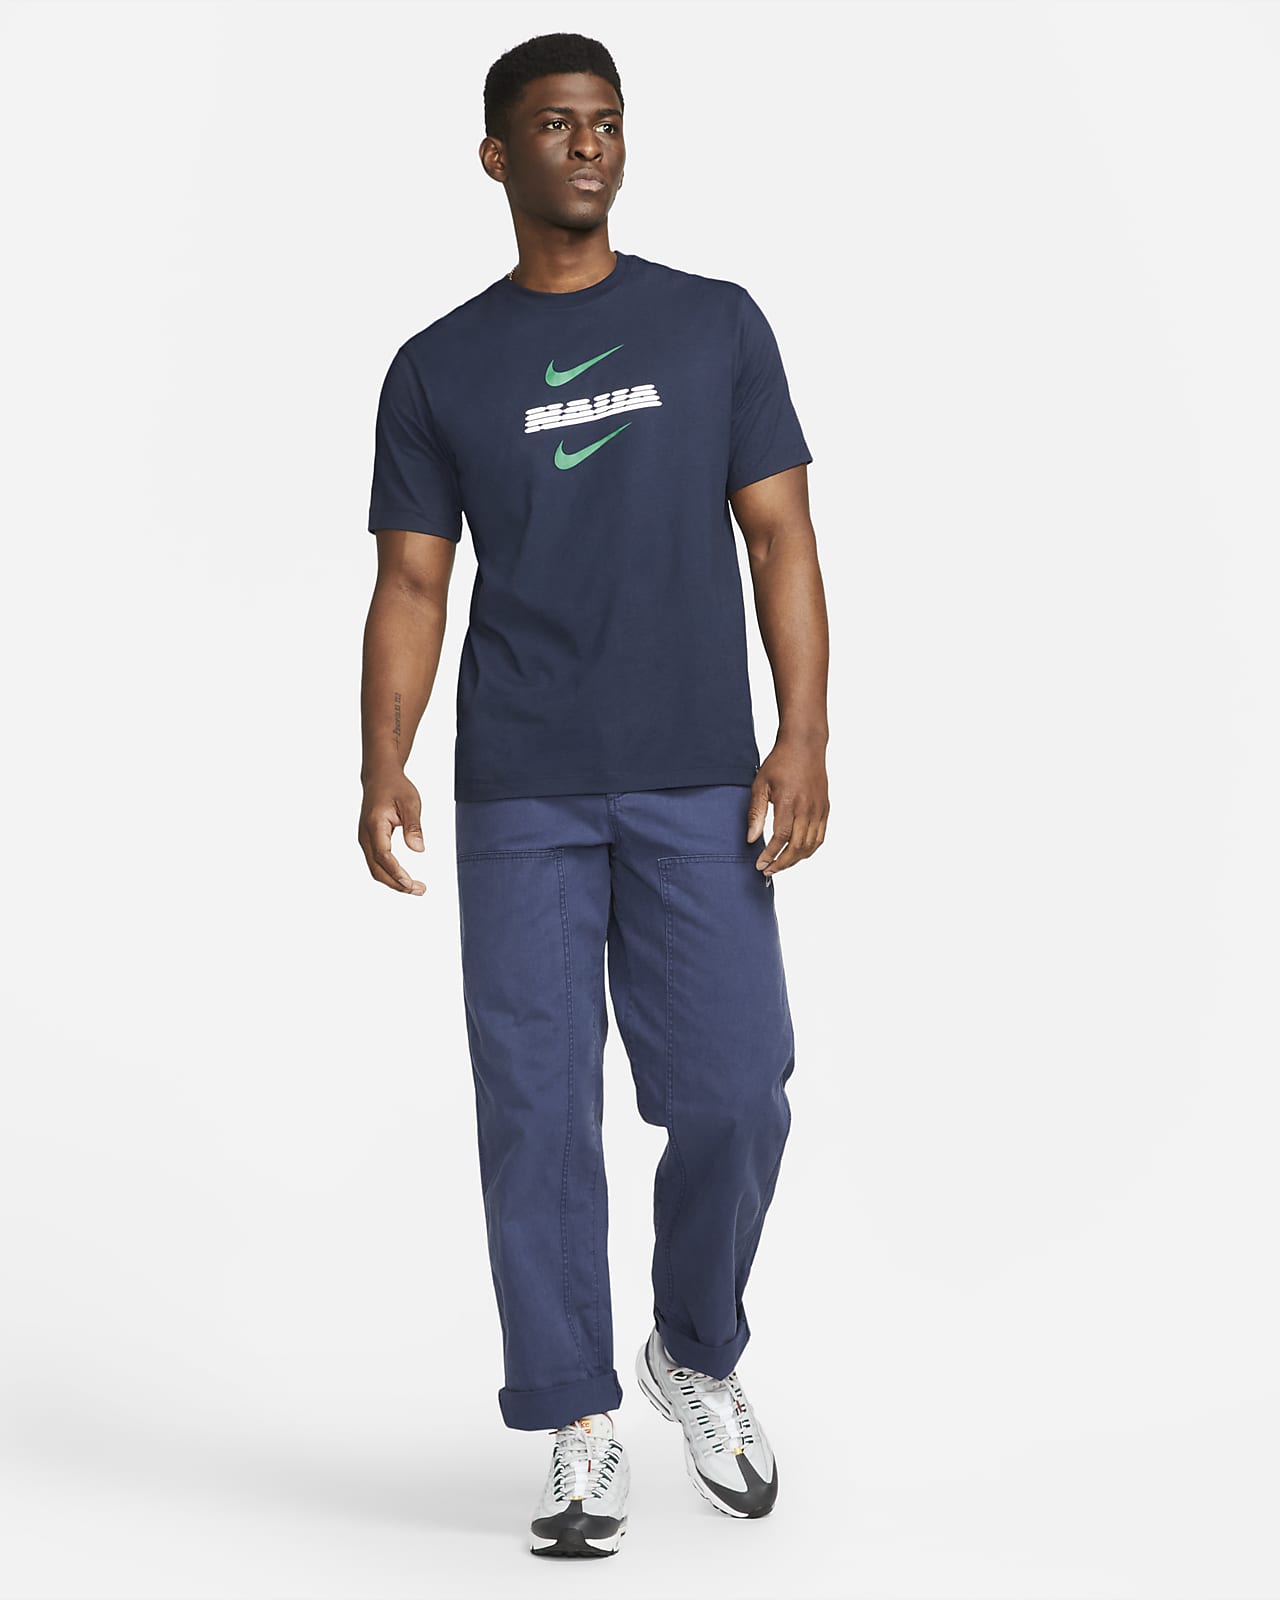 Swoosh Men's Nike T-Shirt.